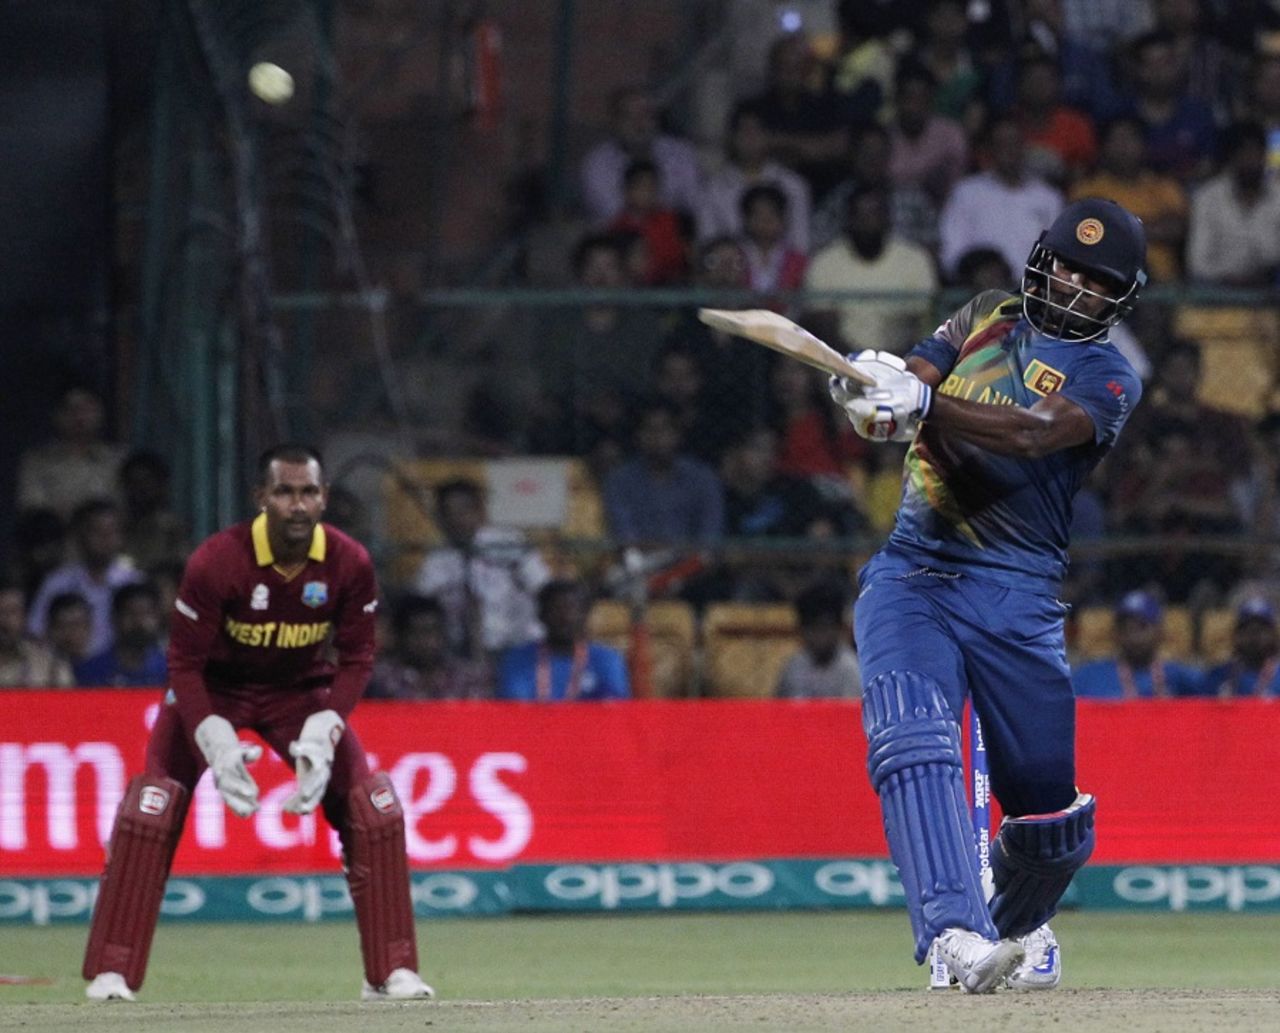 Thisara Perera pulls the ball, Sri Lanka v West Indies, World T20 2016, Group 1, Bangalore, March 20, 2016